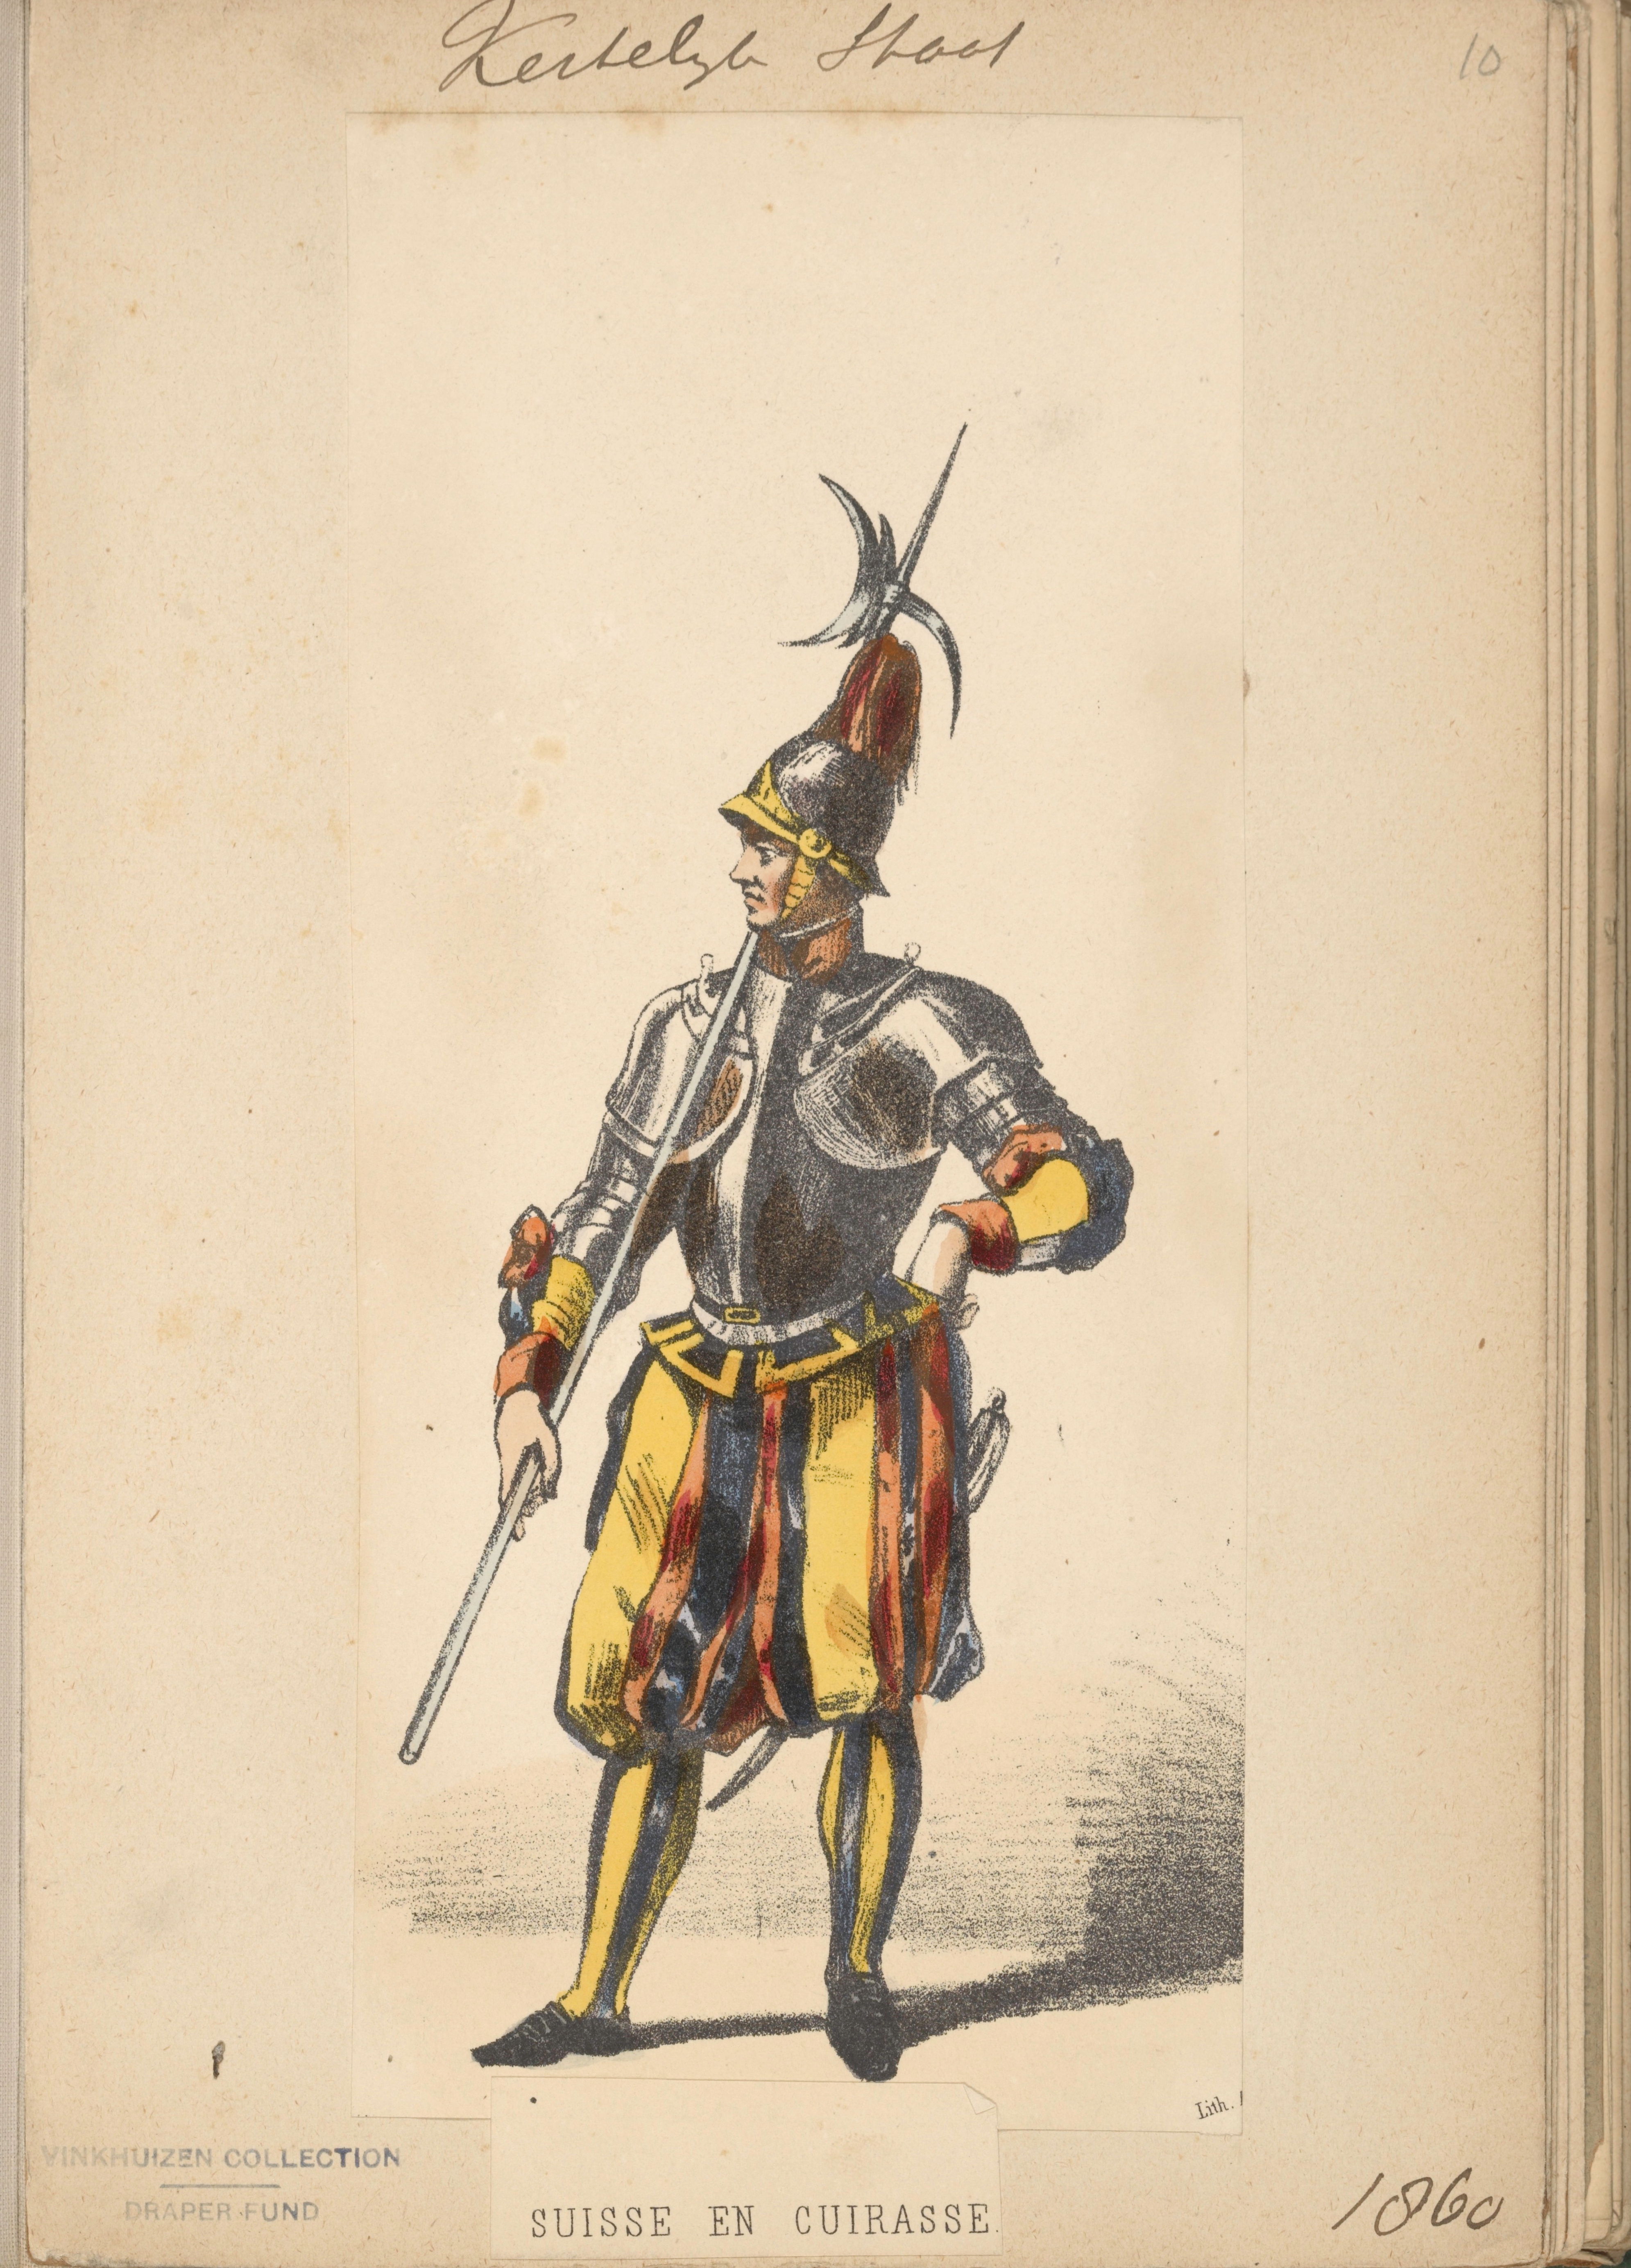 Swiss Guard uniform and armor style circa 1850 (Pius IX. 